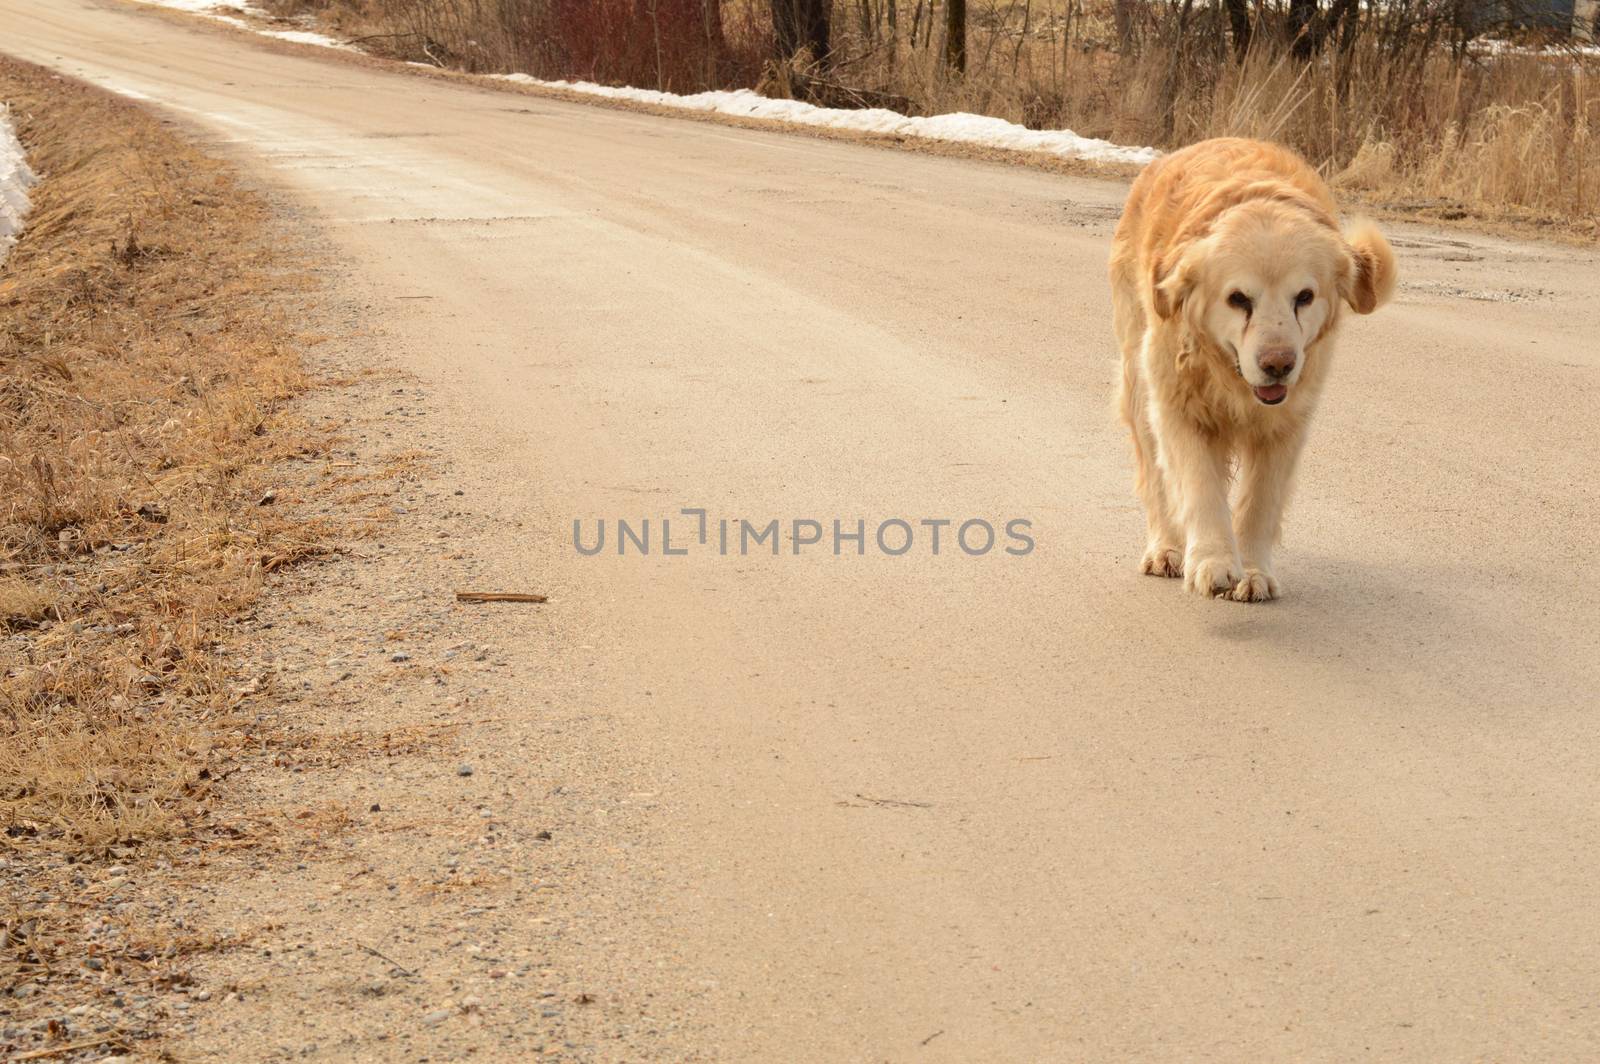 A golden retriever walks down the dirt road on his own.